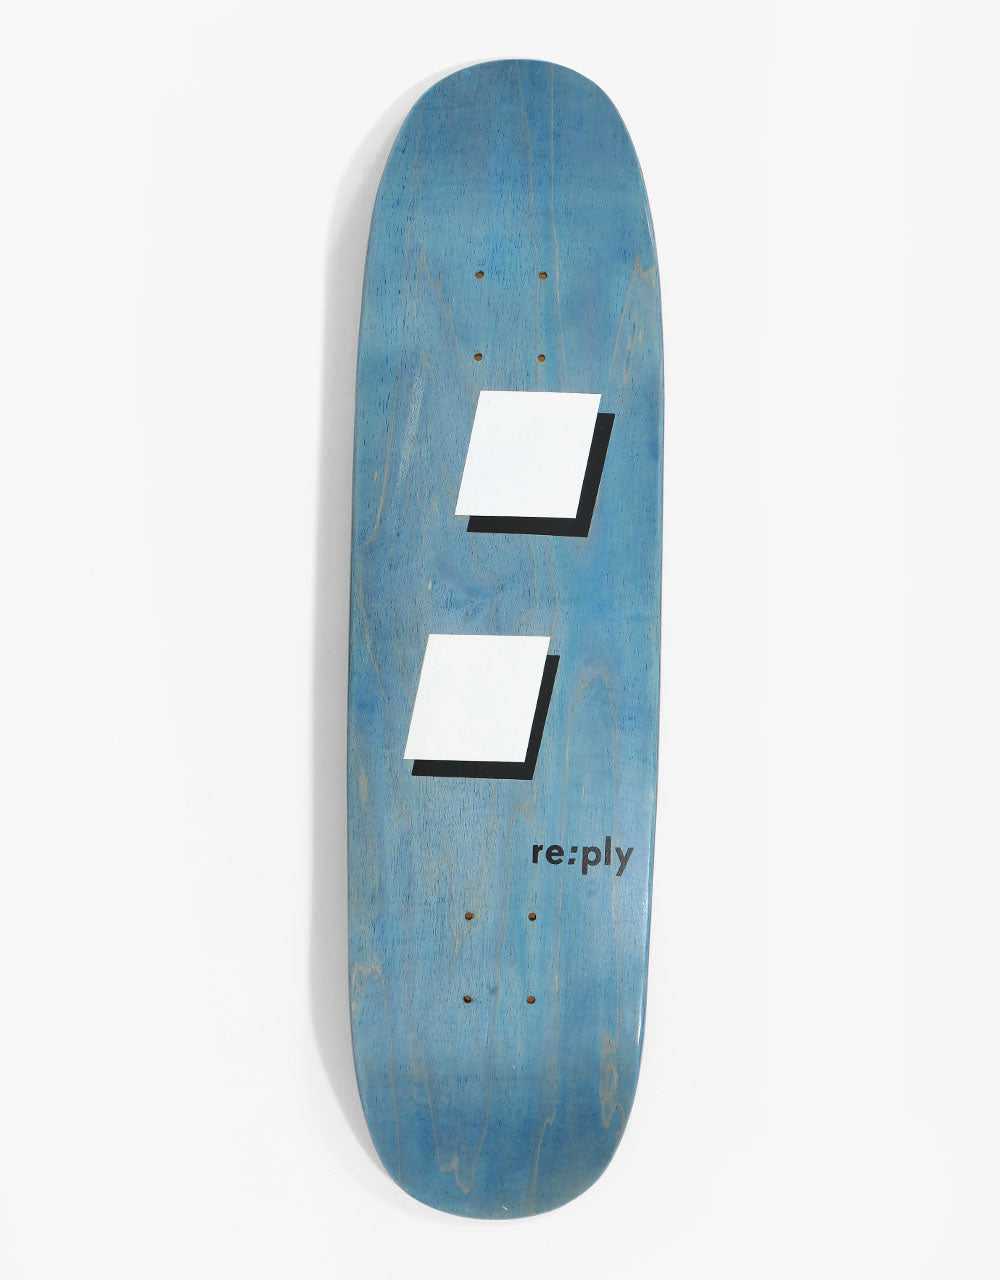 re:ply Tan Oak Skateboard Deck - 8" x 30.5"